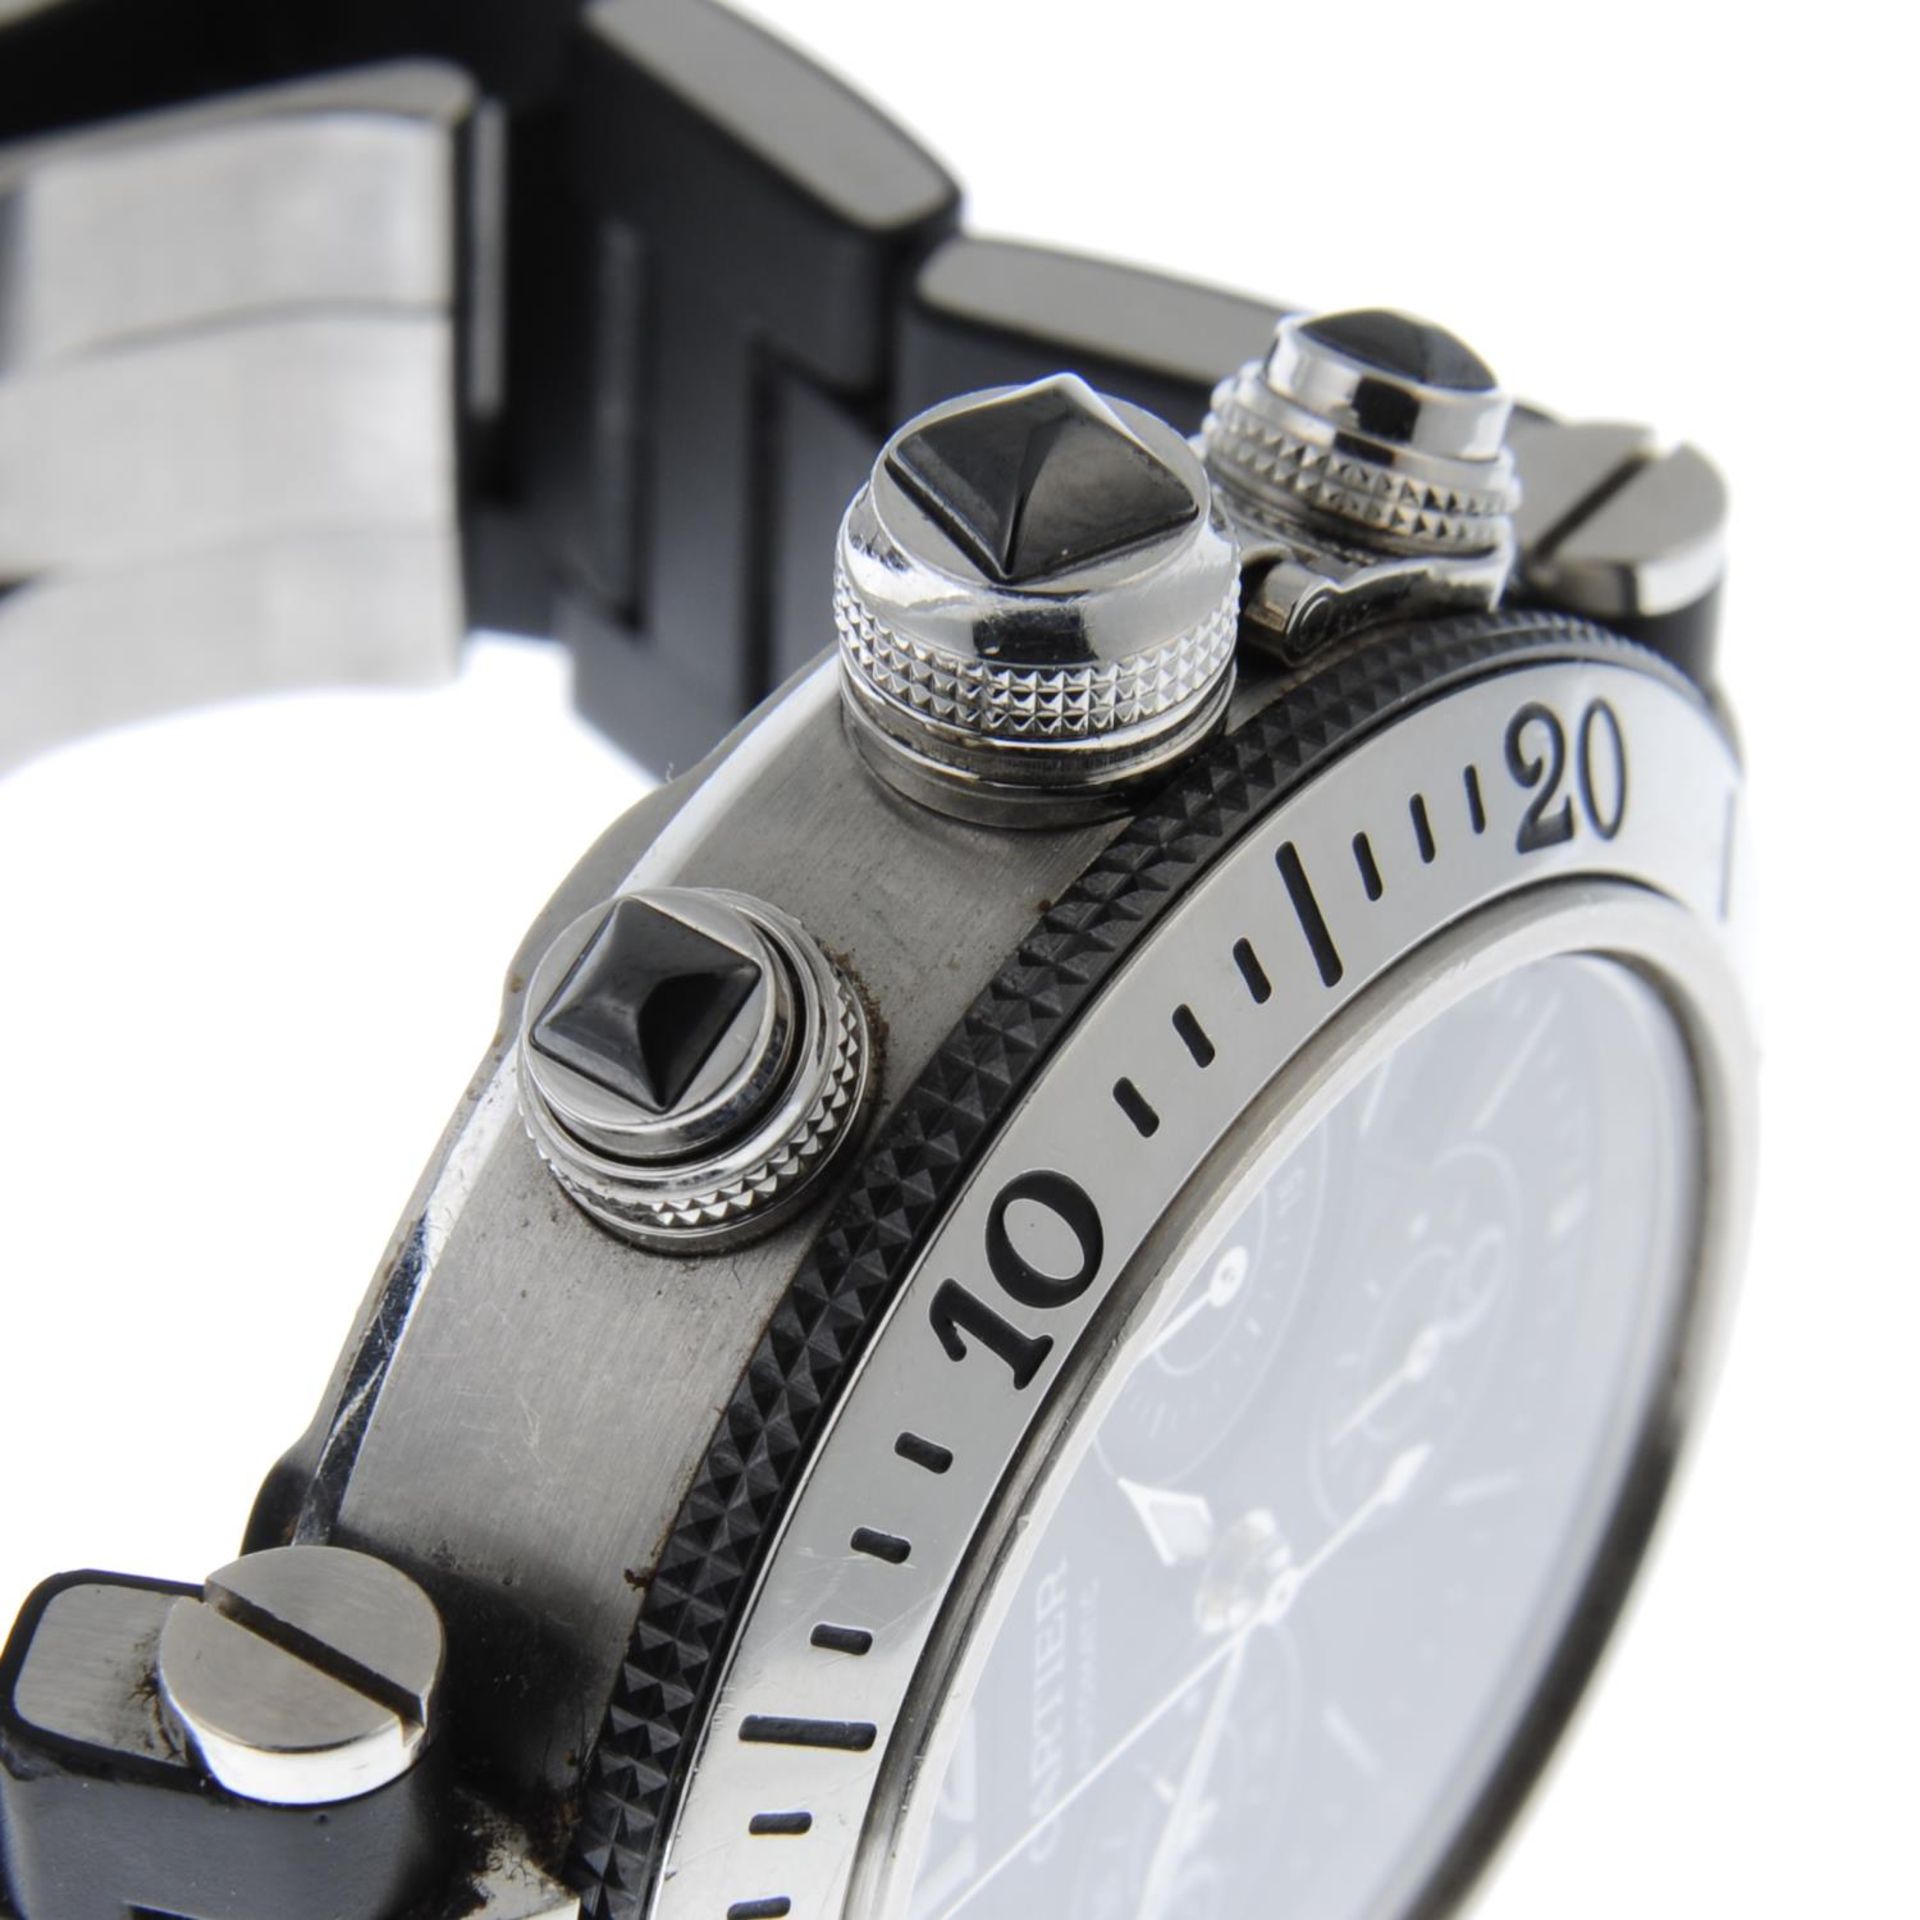 CARTIER - a Pasha chronograph bracelet watch. - Image 5 of 5